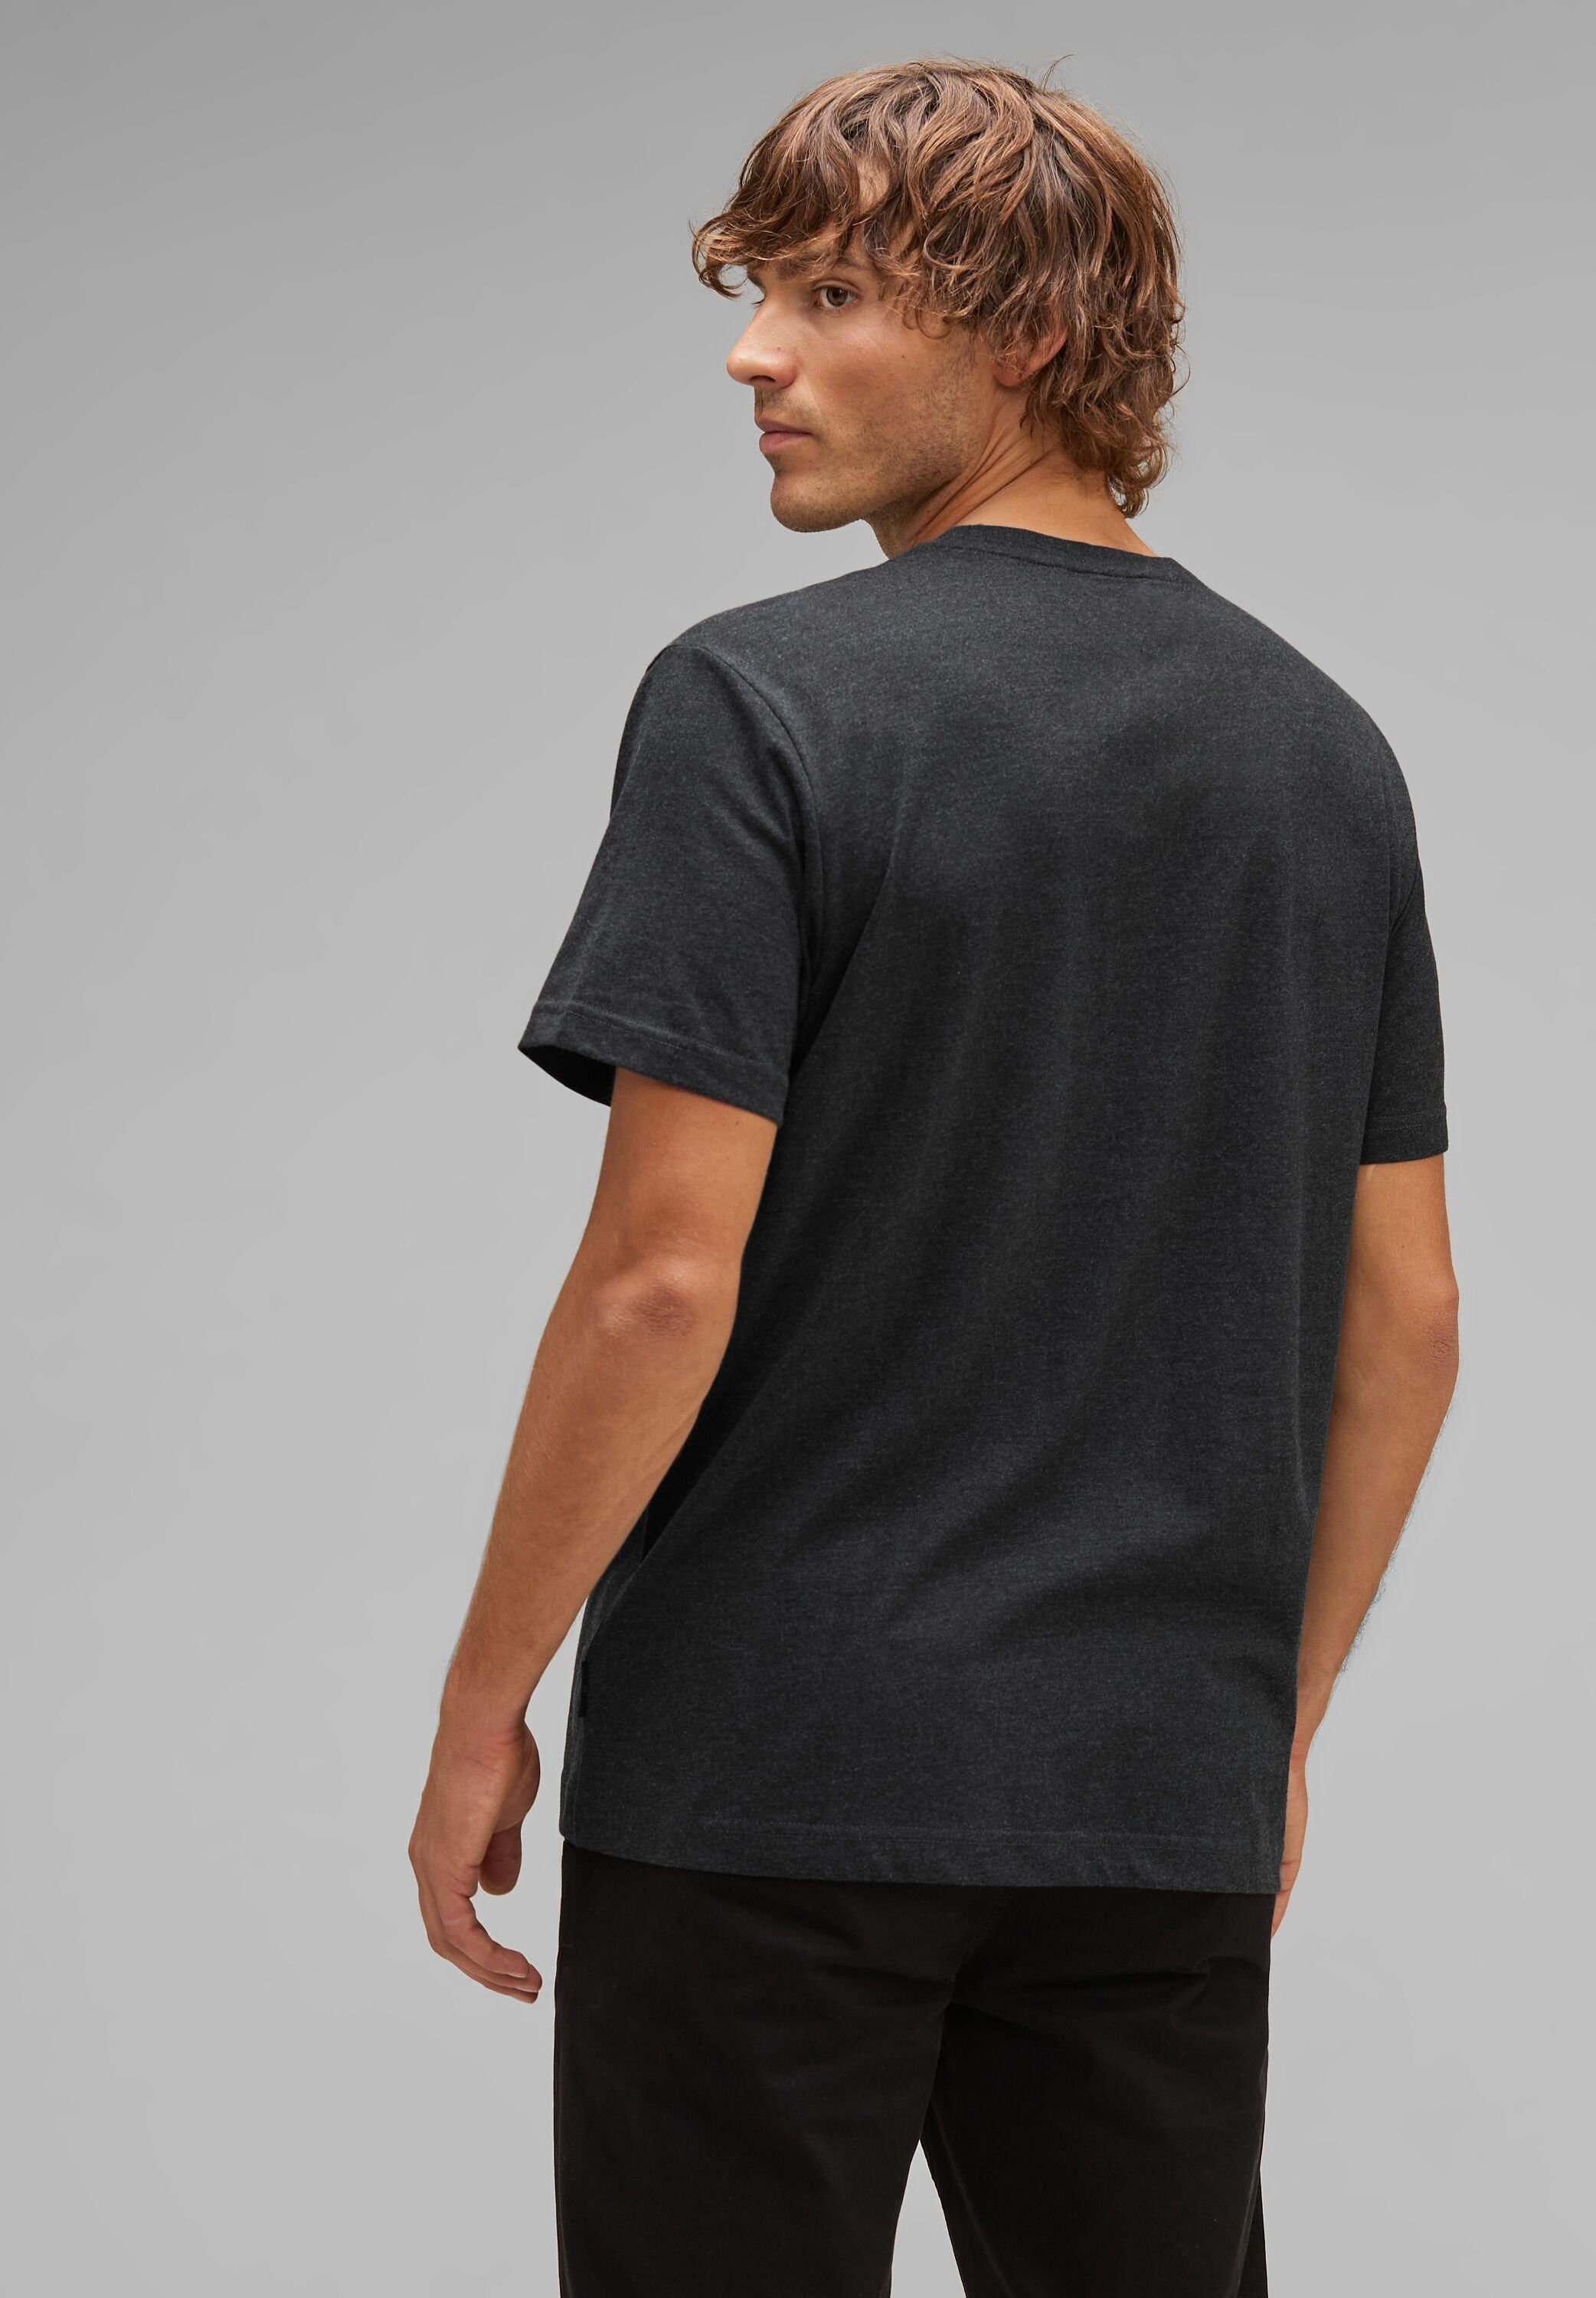 Materialmix STREET aus softem ONE melange T-Shirt anthra MEN grey